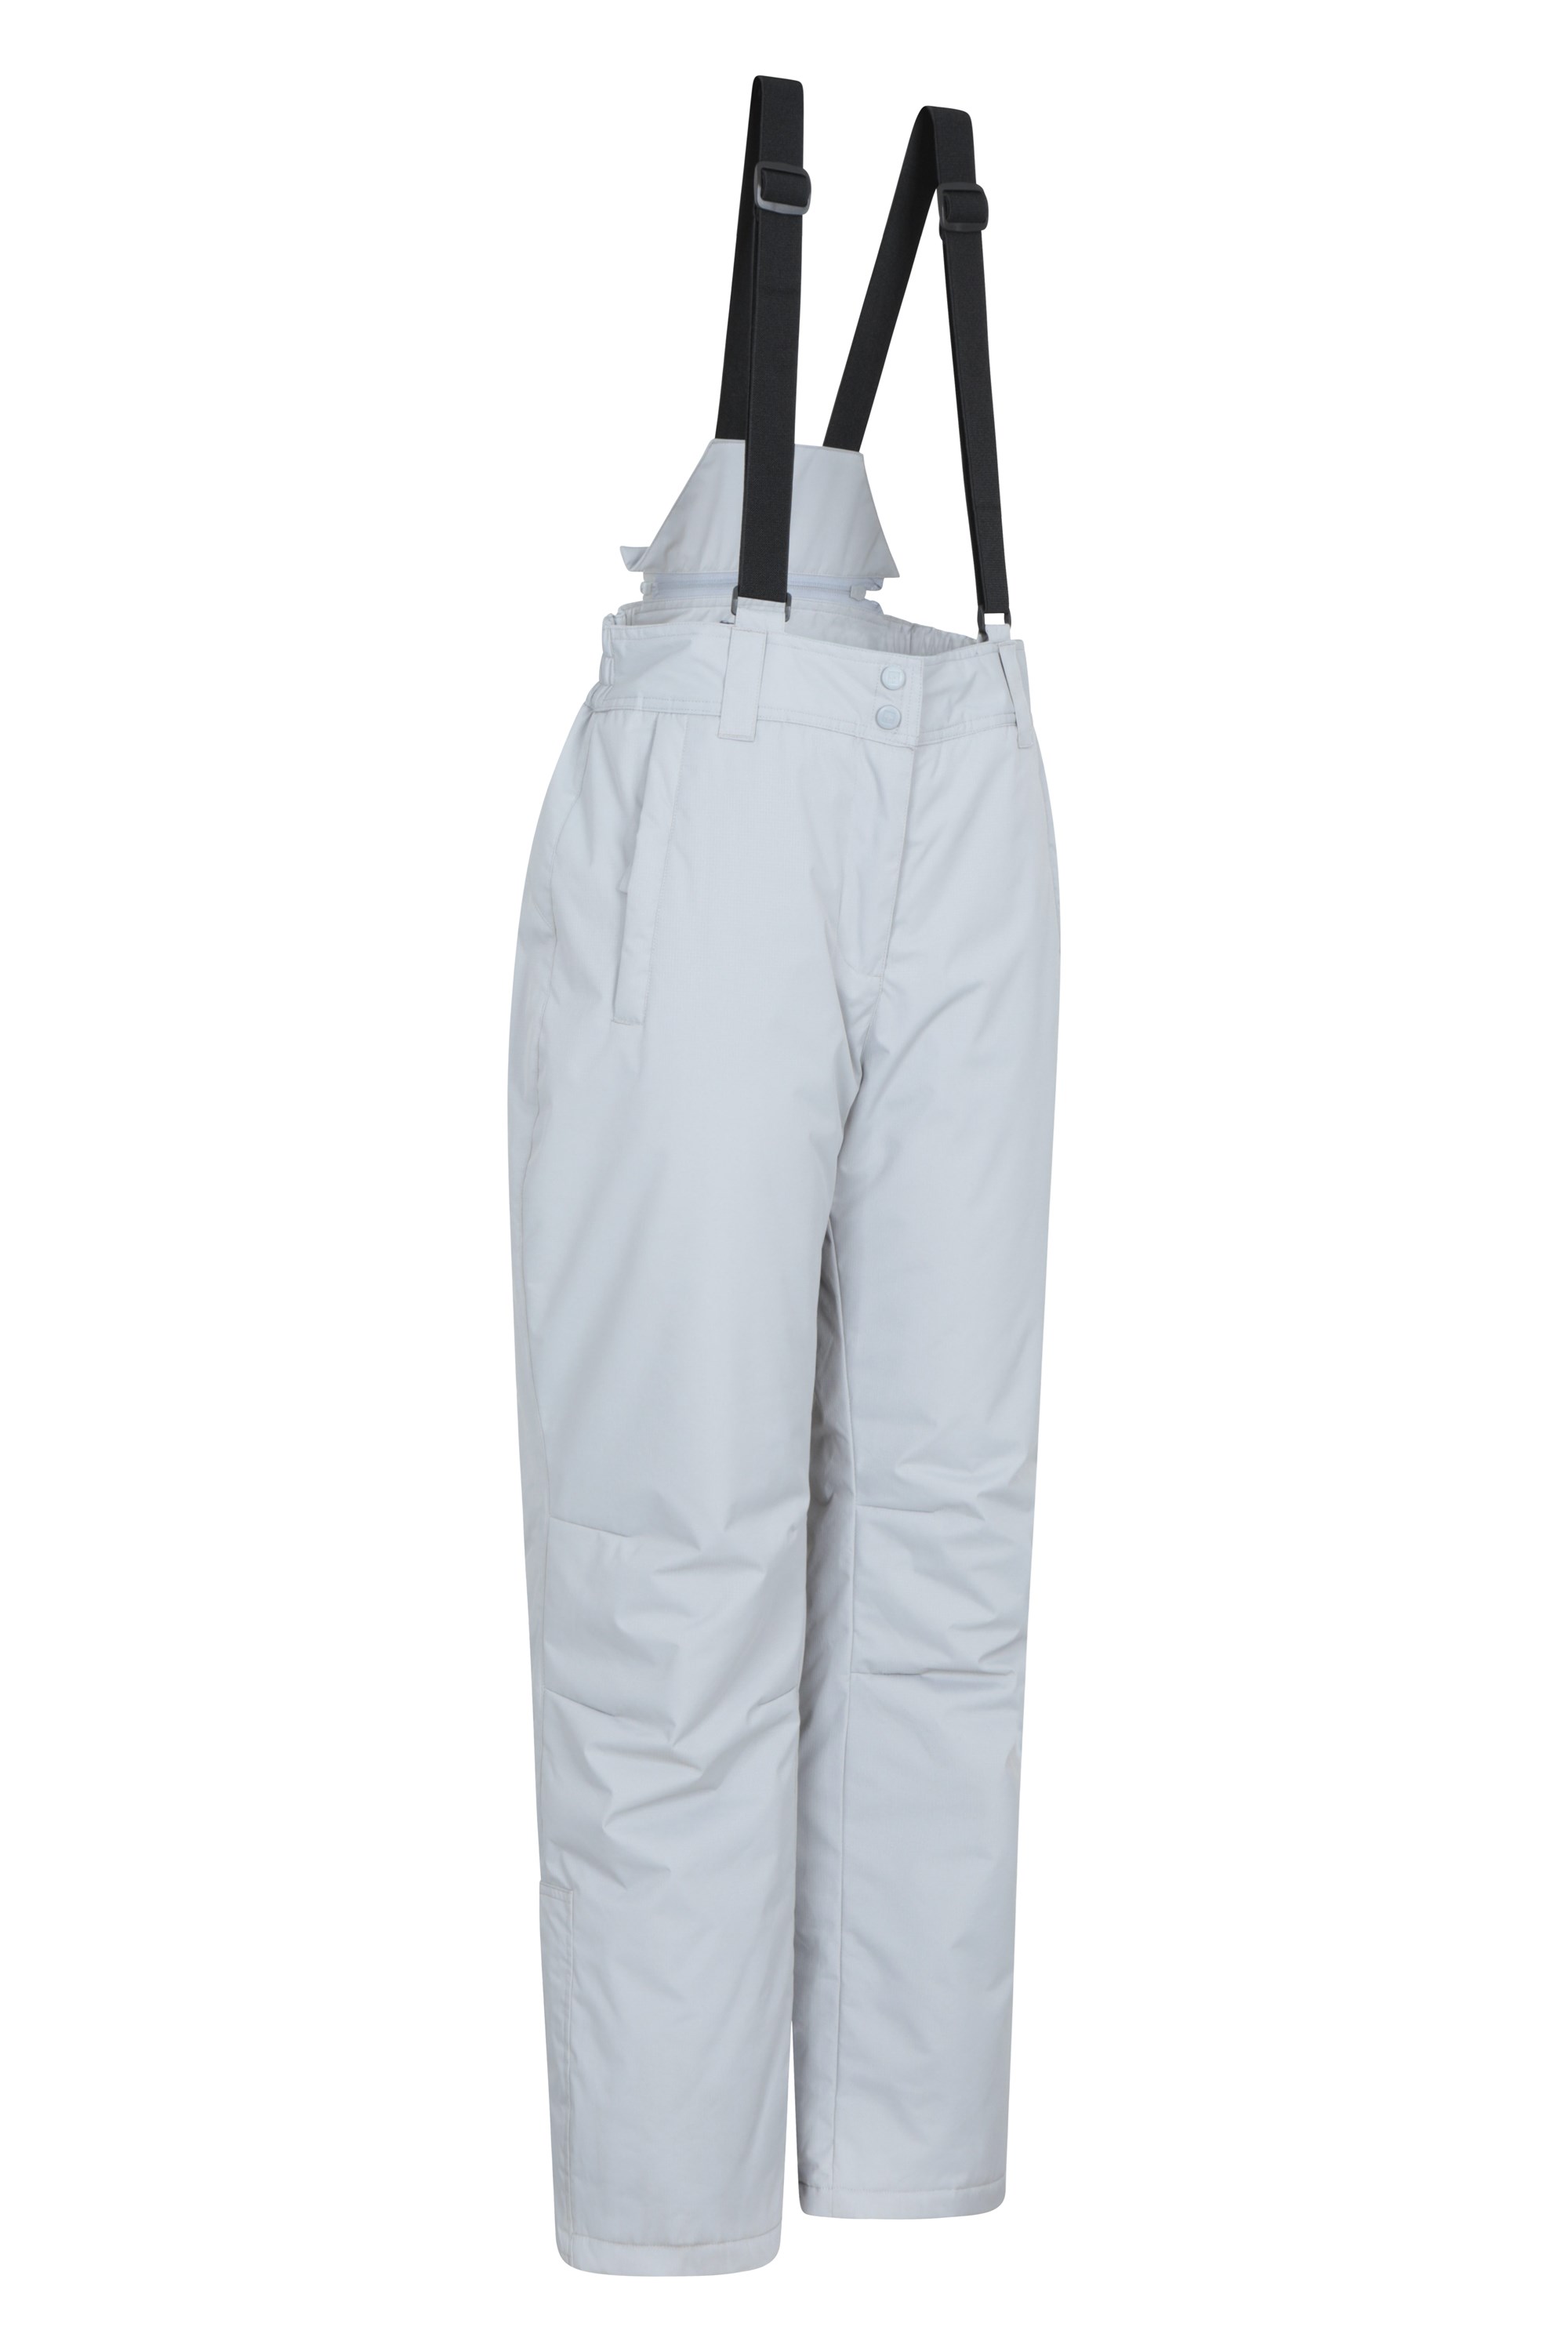 NEW Womens Mountain Warehouse Ski Trousers Salopettes 8 Grey Textured RRP £99.99 